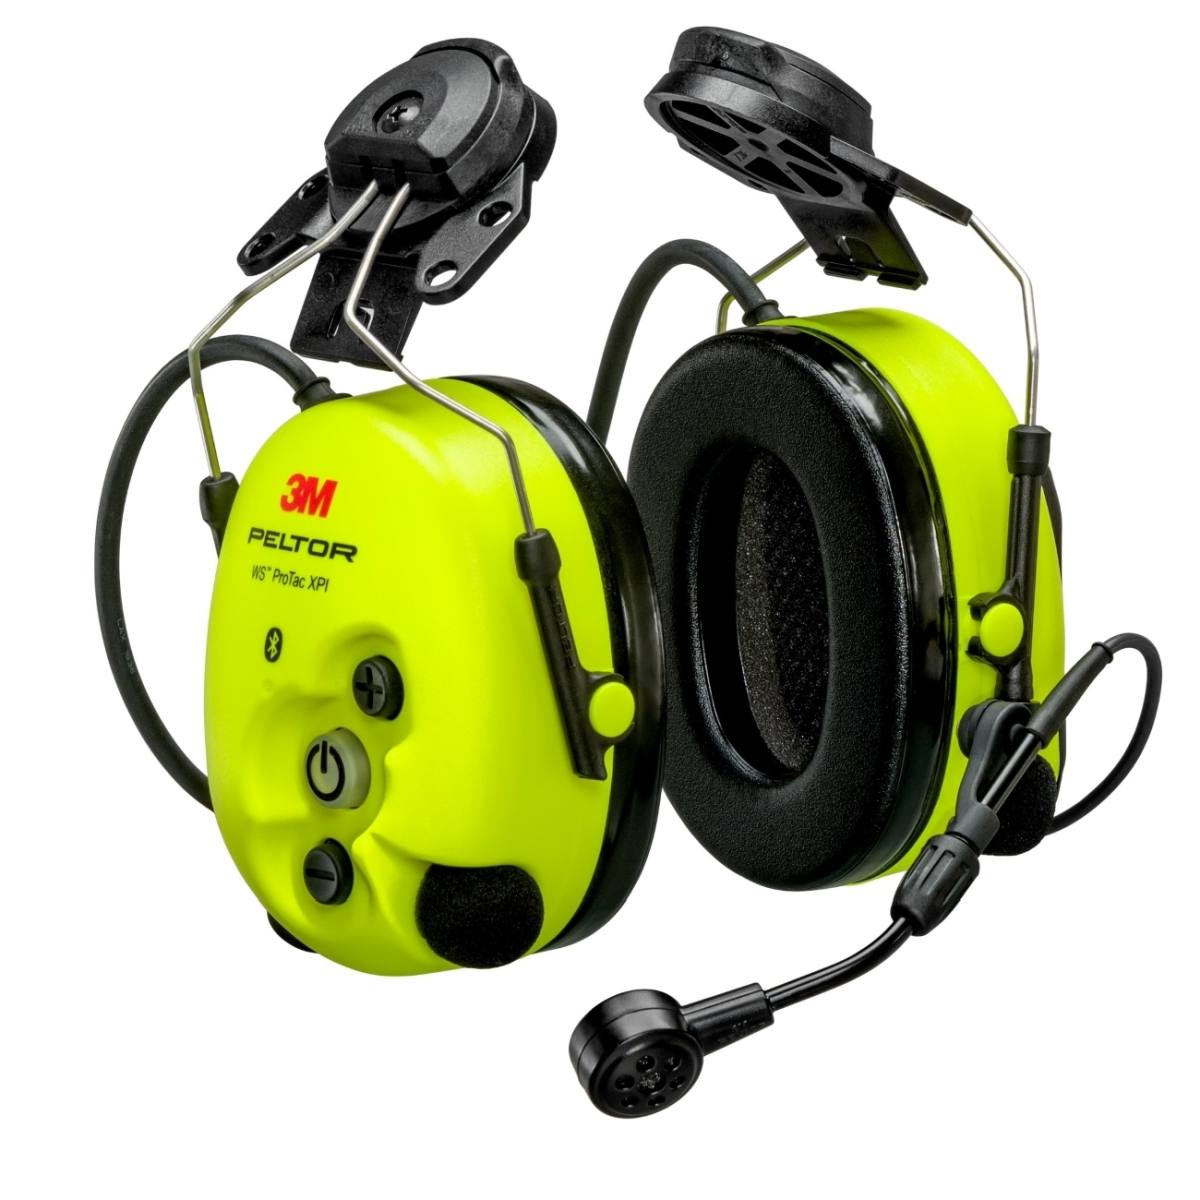 3M PELTOR WS ProTac XPI hearing protection headset FLX2, helmet attachment, Bluetooth, yellow, MT15H7P3EWS6-111